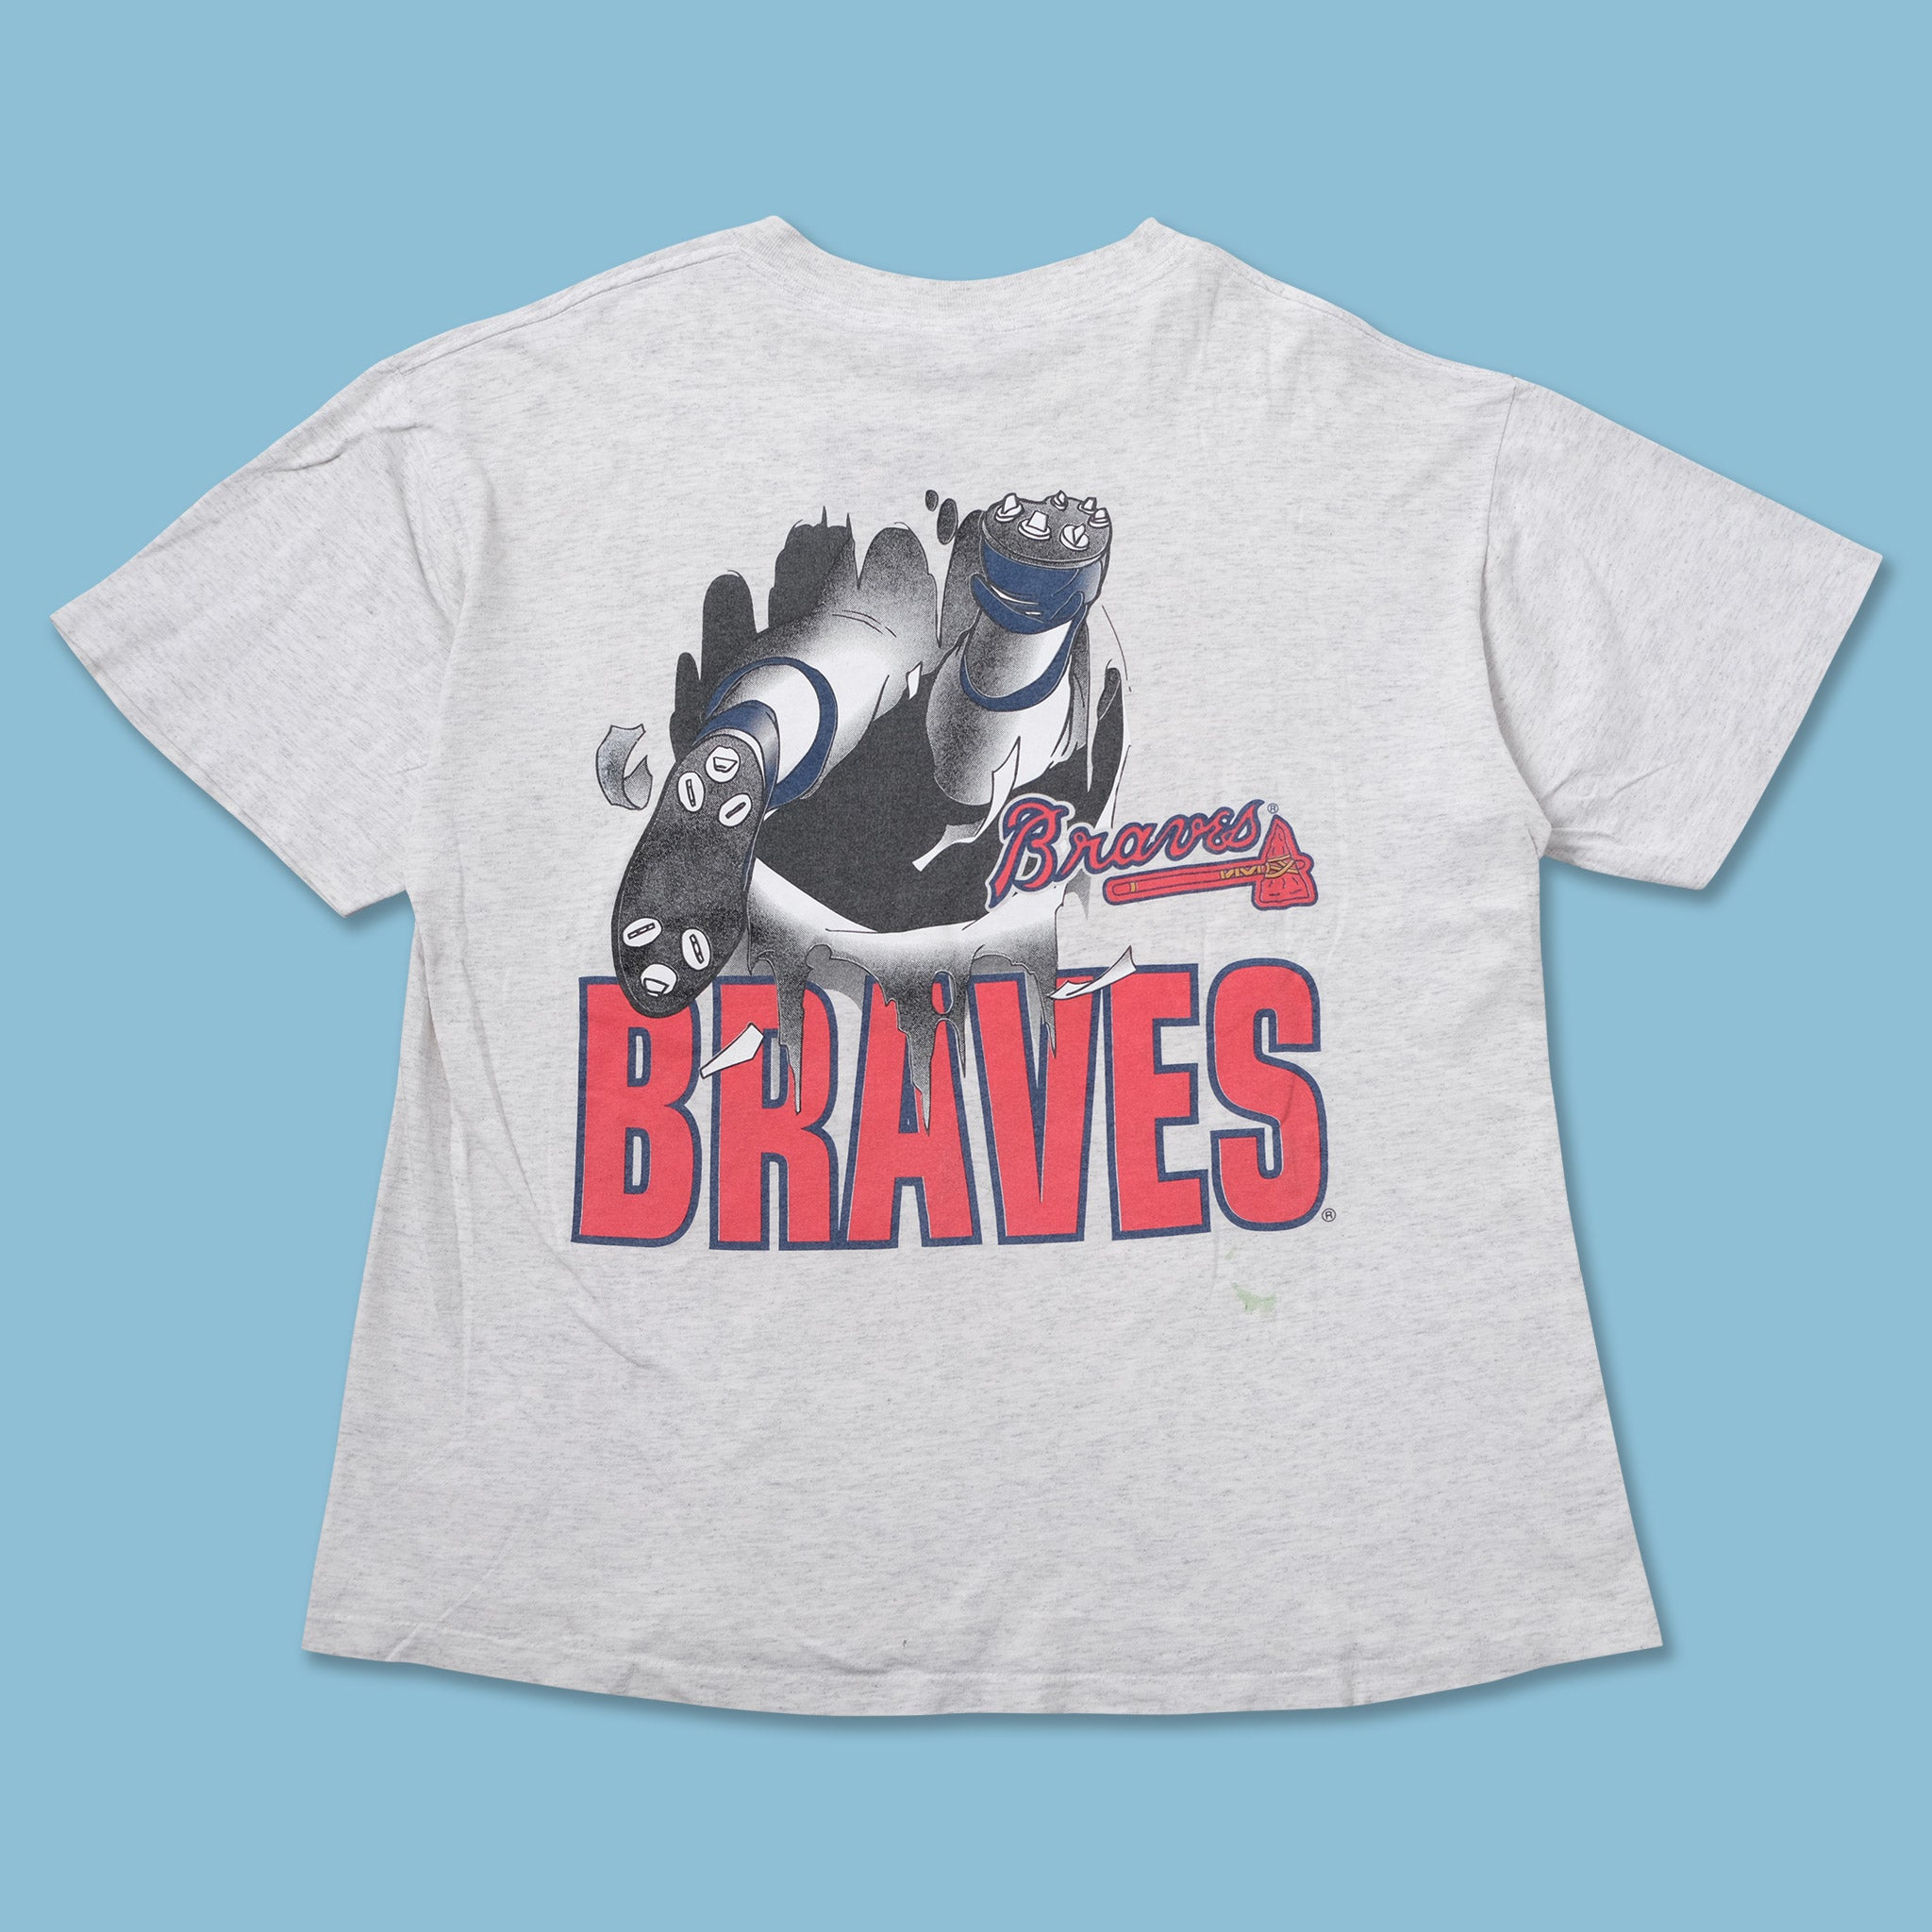 Cobblestore Vintage Atlanta Braves Shirt 90s Atlanta Braves Tshirt 1993 Atlanta Braves Baseball Tee Play Ball Shirt Lets Go Braves Vintage Braves Shirt